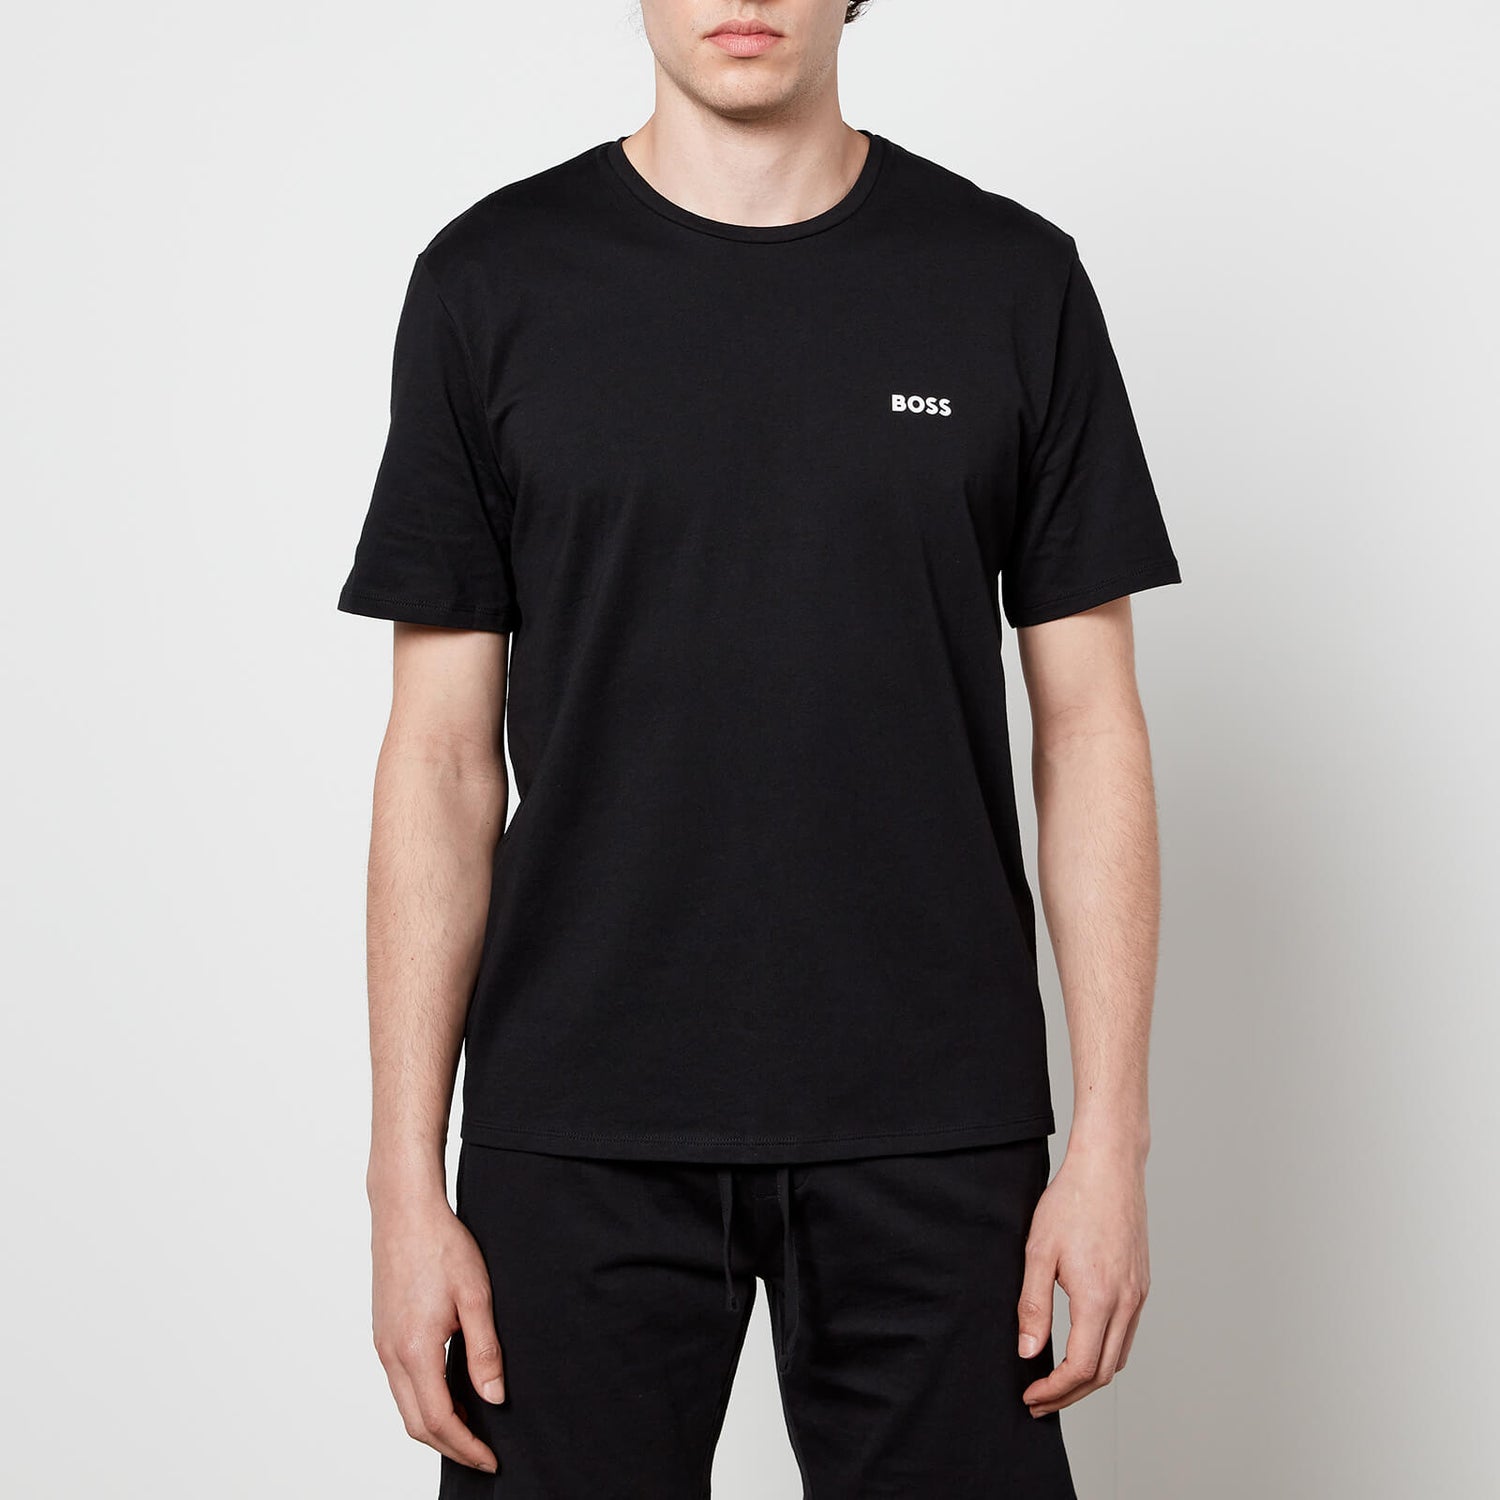 BOSS Bodywear Men's Fashion T-Shirt - Black - S